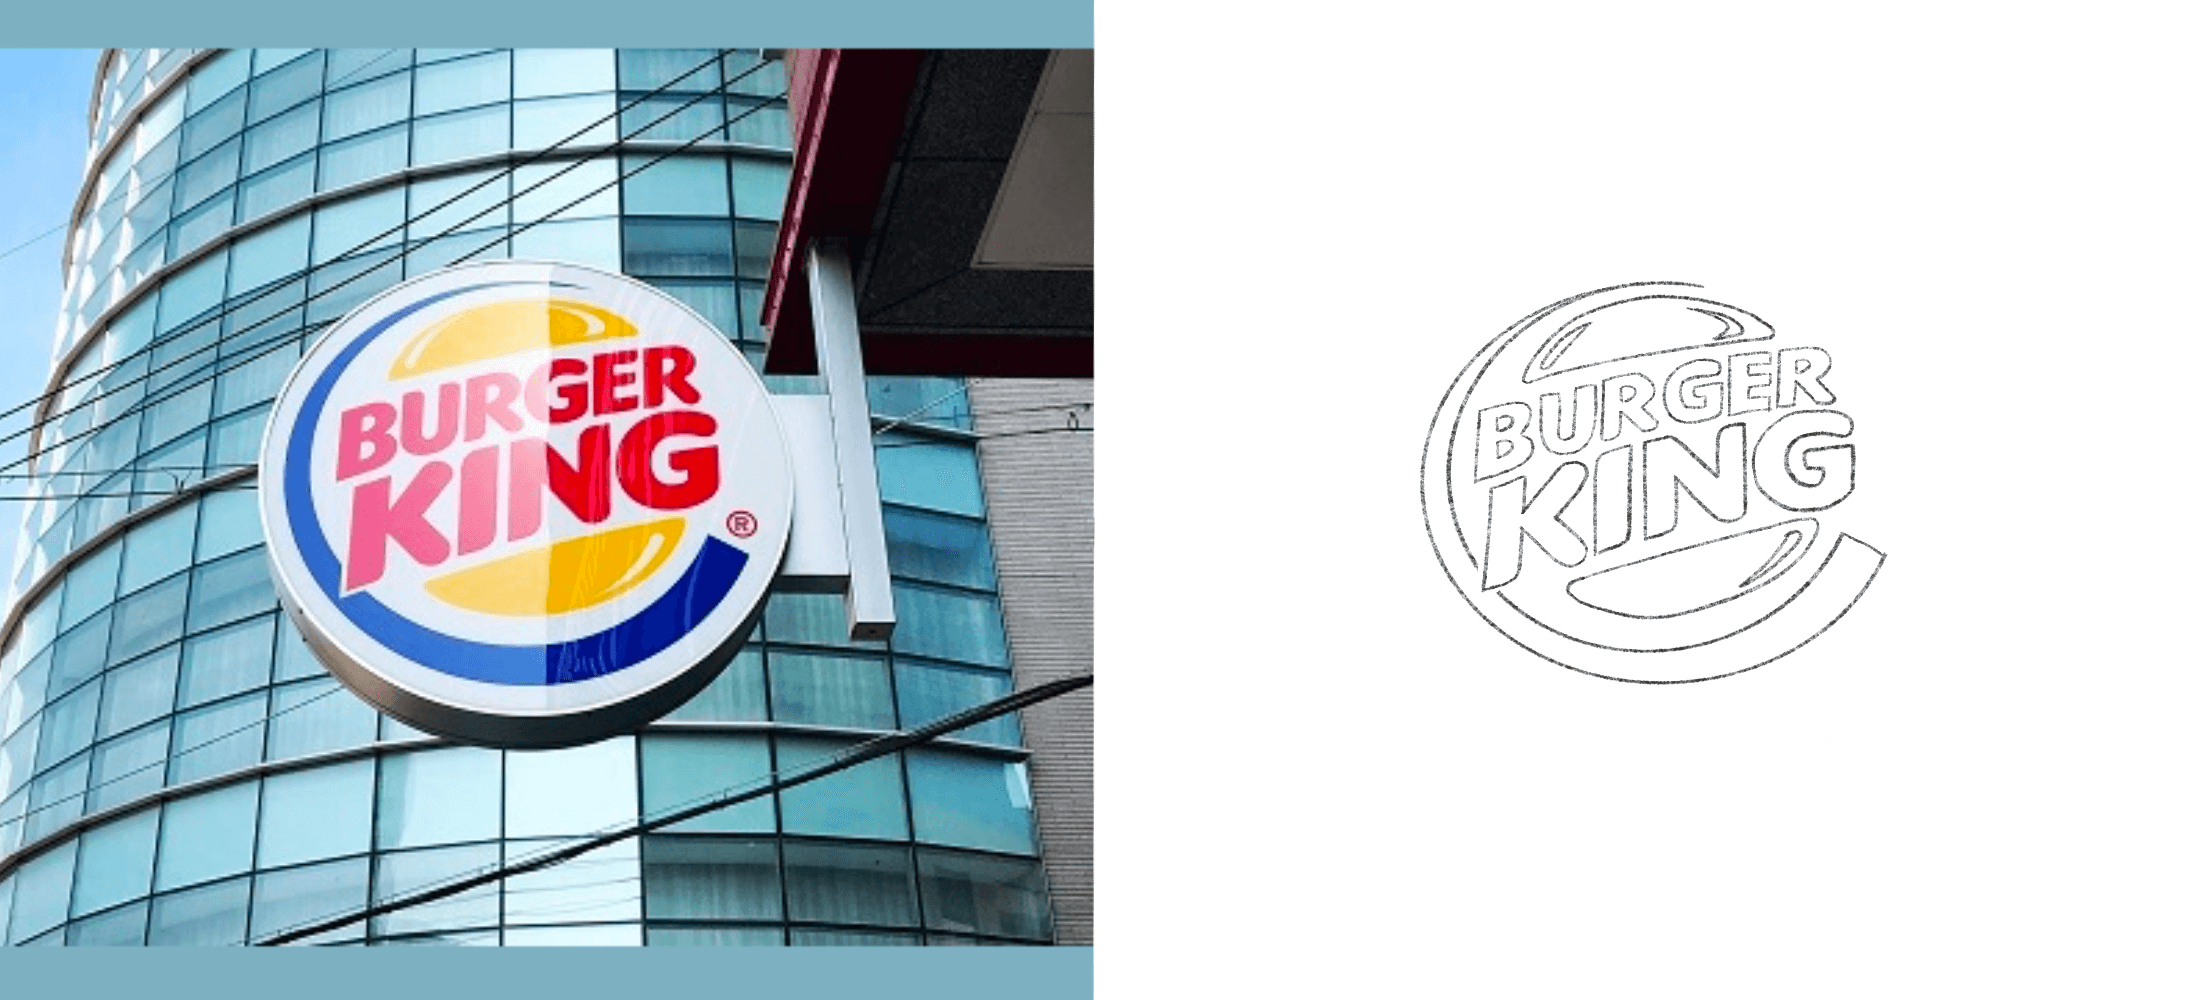 Shining Burger King logo hanging at the side of a Burger King restaurant alongside a drawn version of the Burger King logo